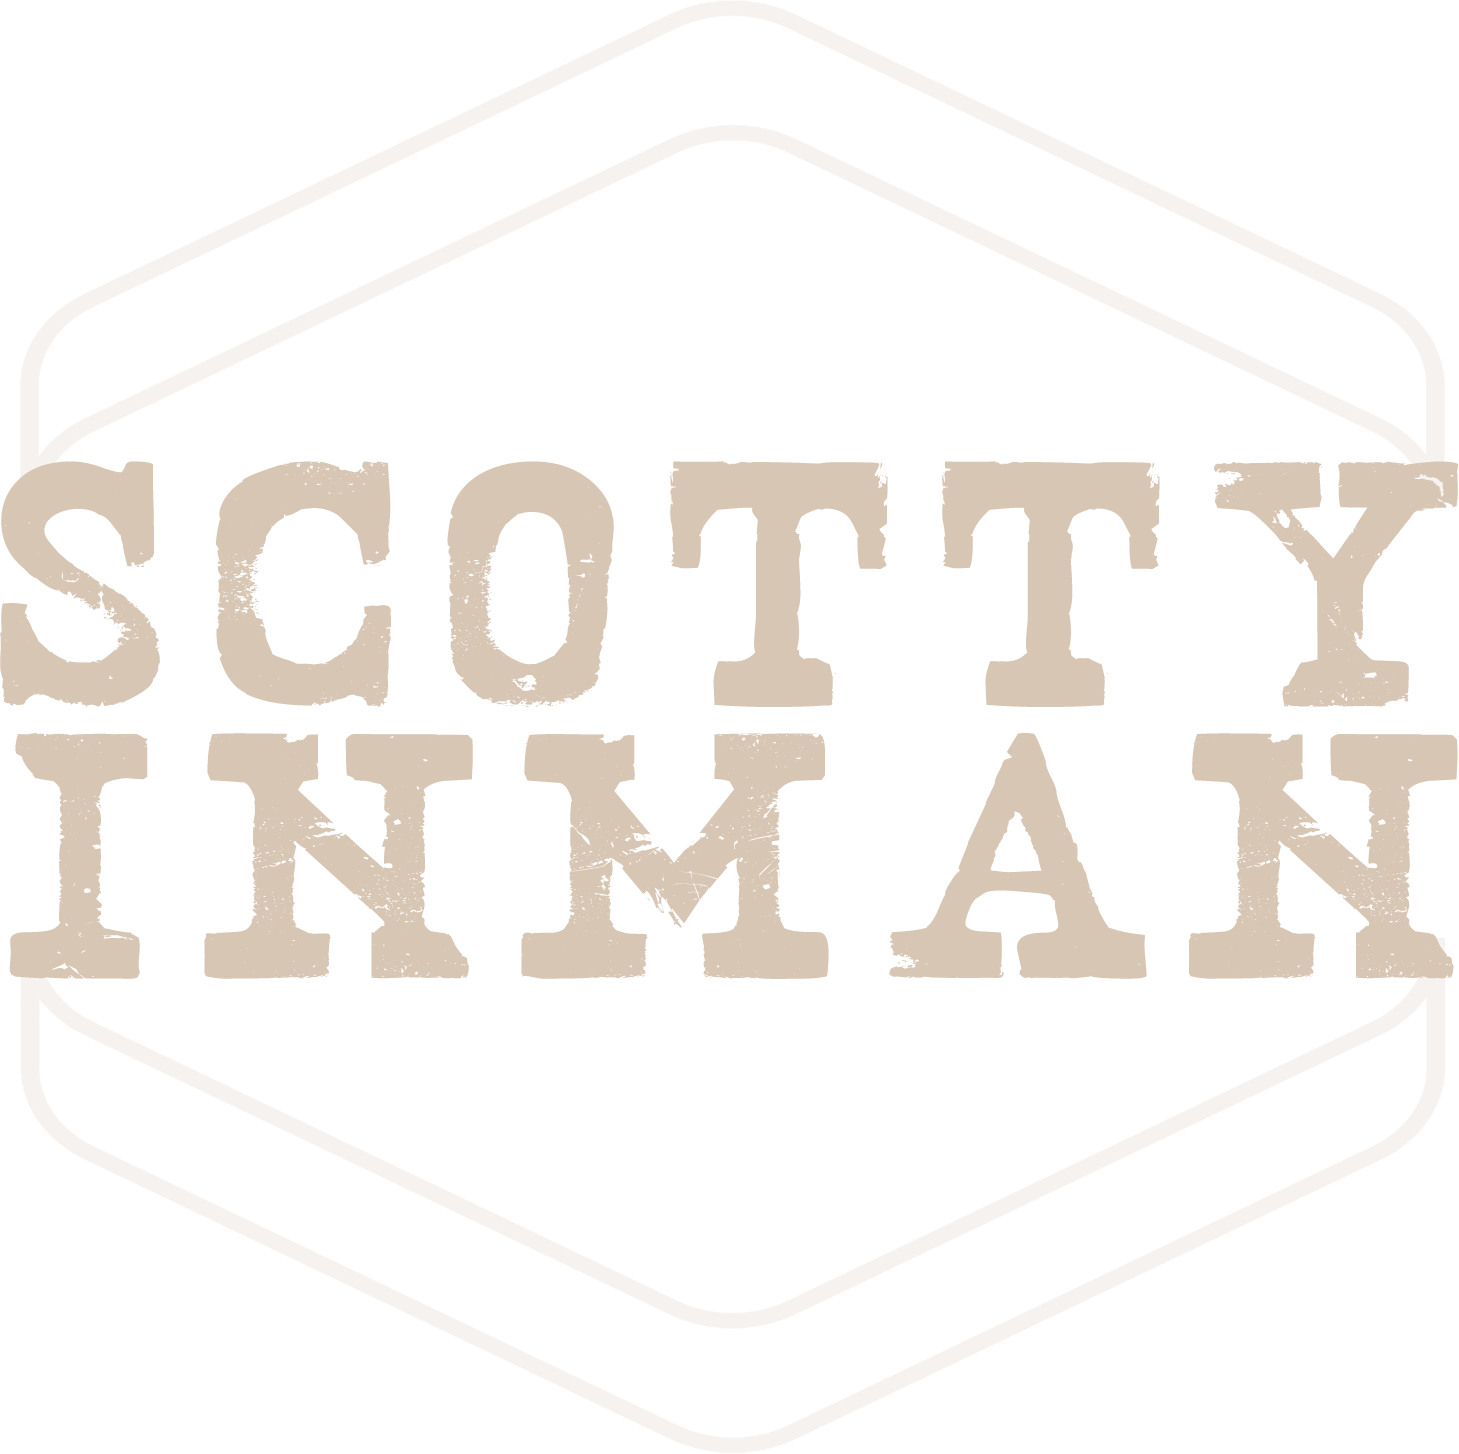 Scotty Inman